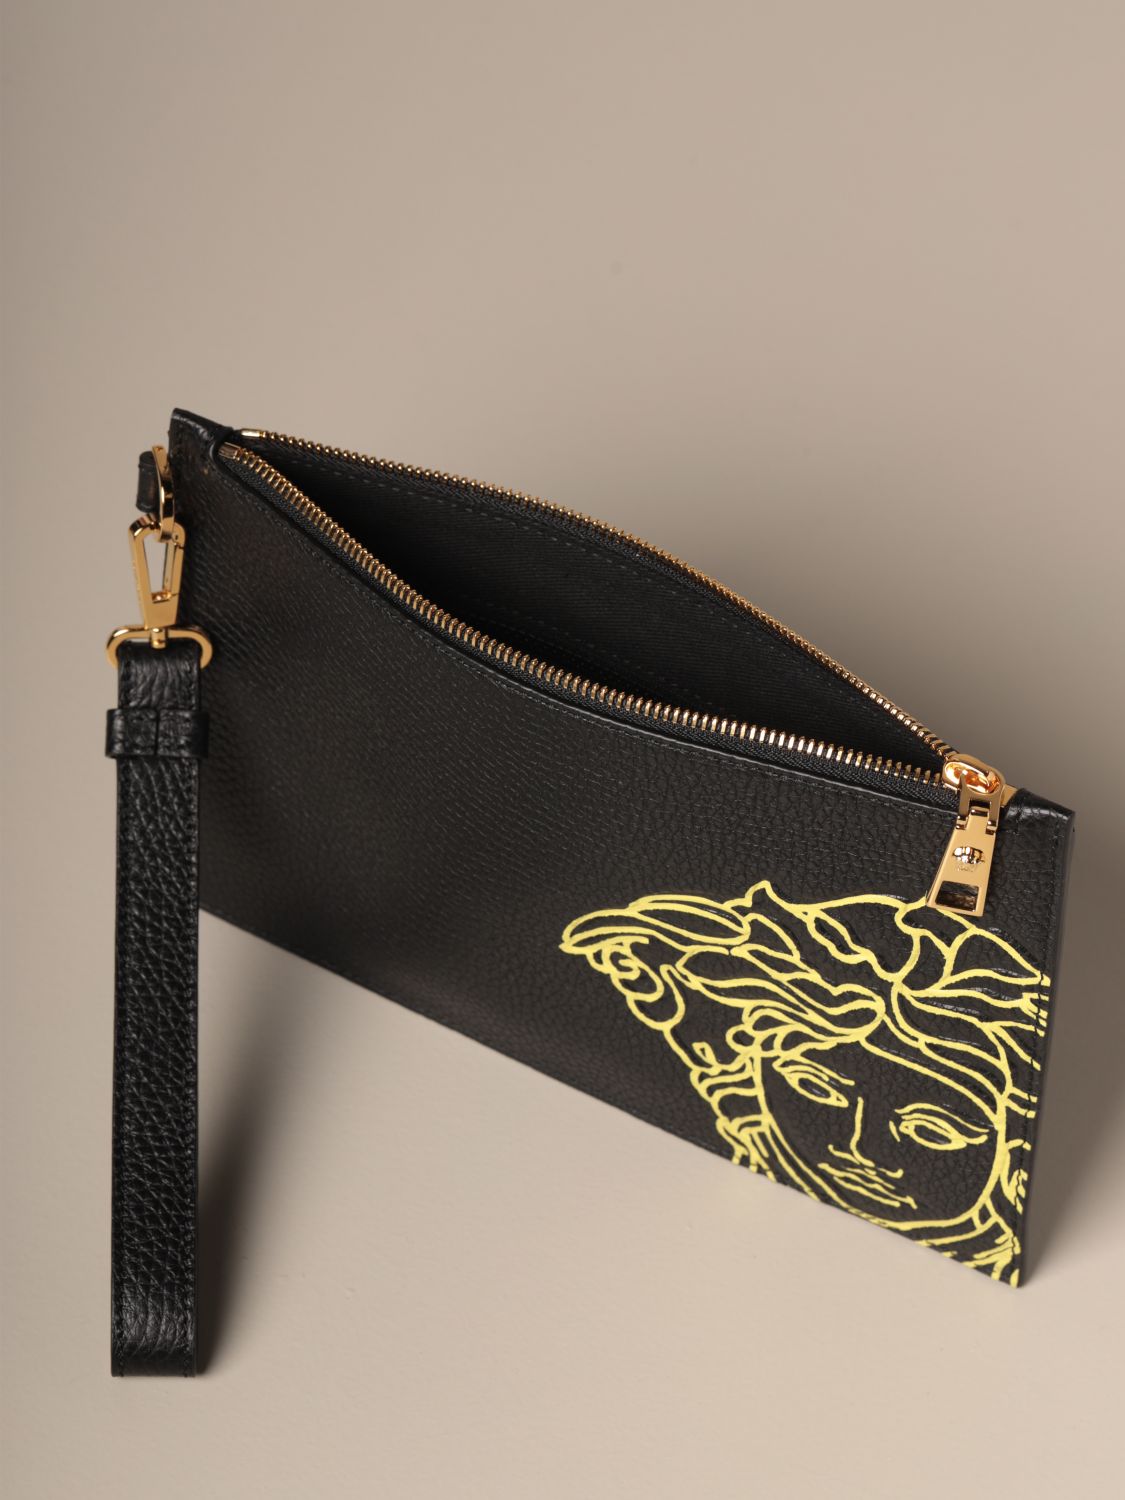 versace clutch purse